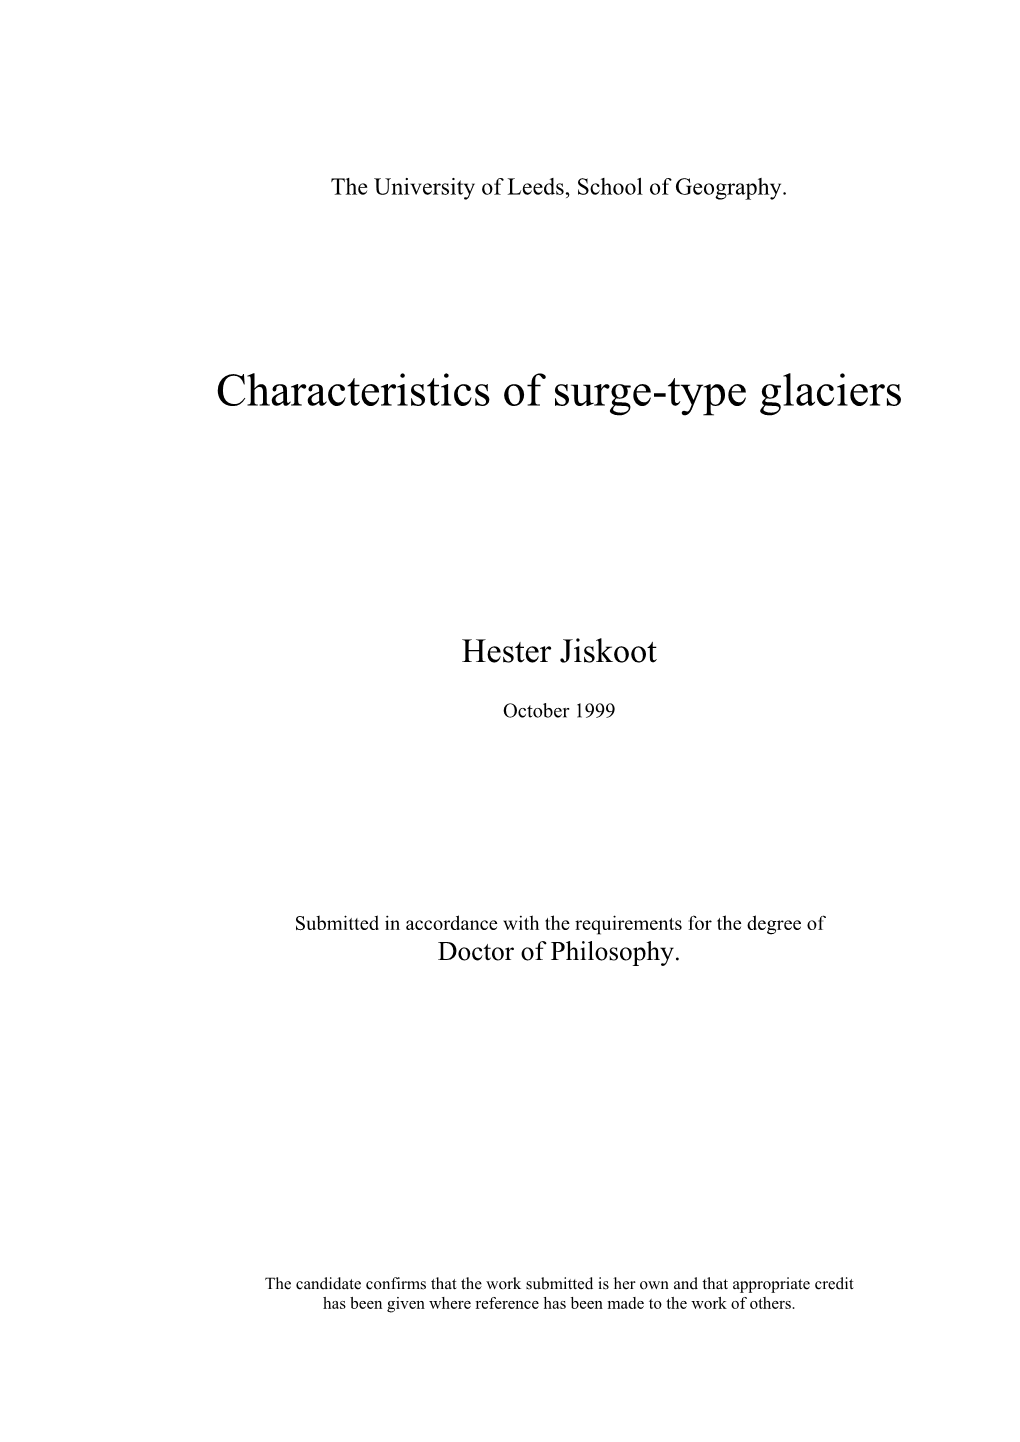 Characteristics of Surge-Type Glaciers